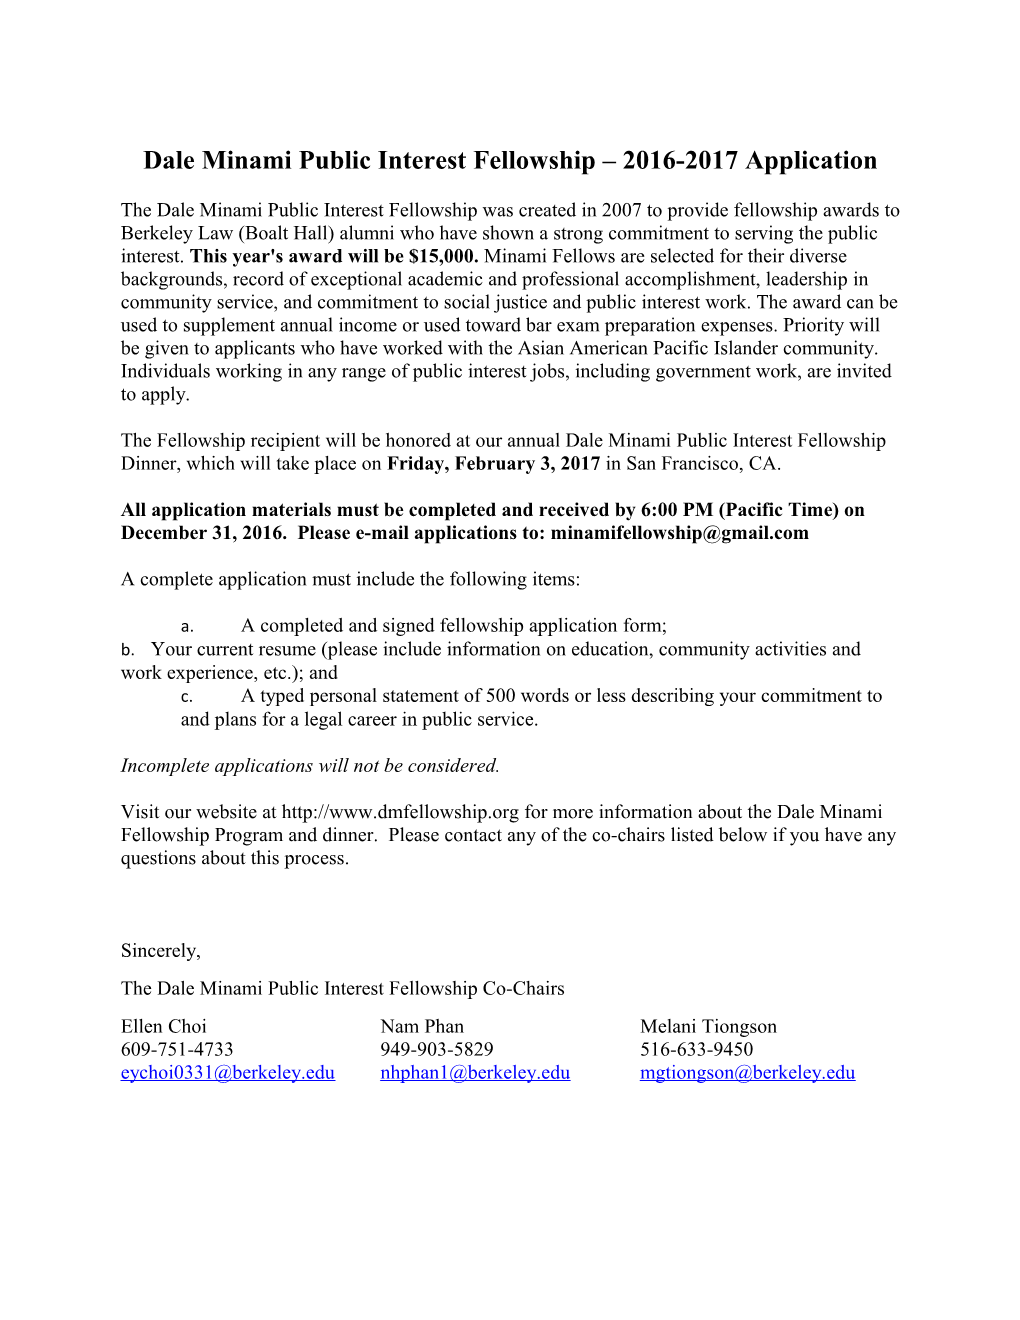 Dale Minami Public Interest Fellowship 2016-2017 Application